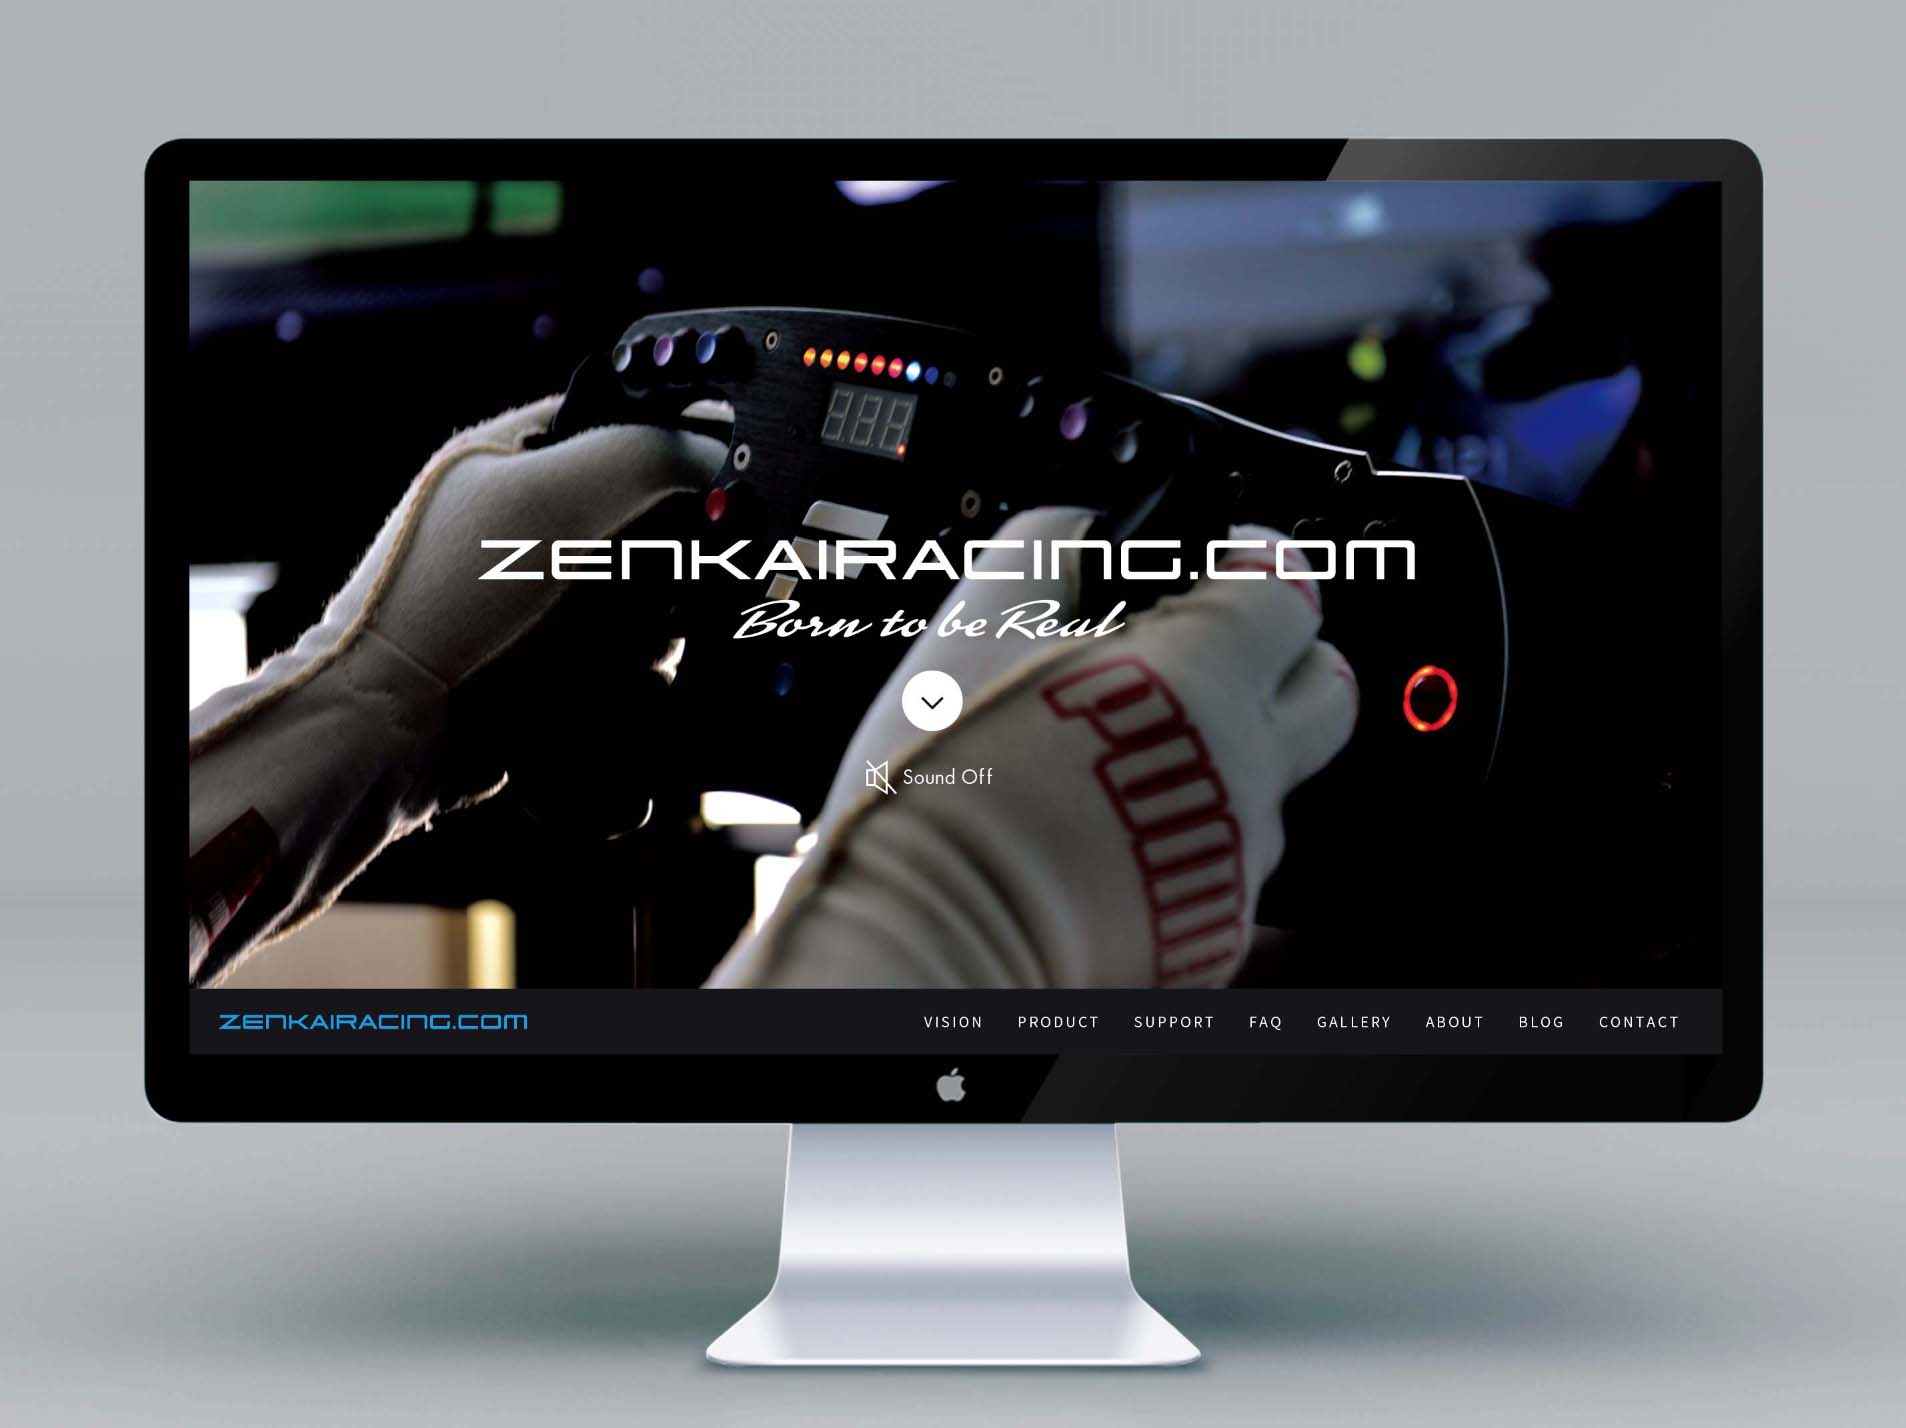 zenkairacing.com branding